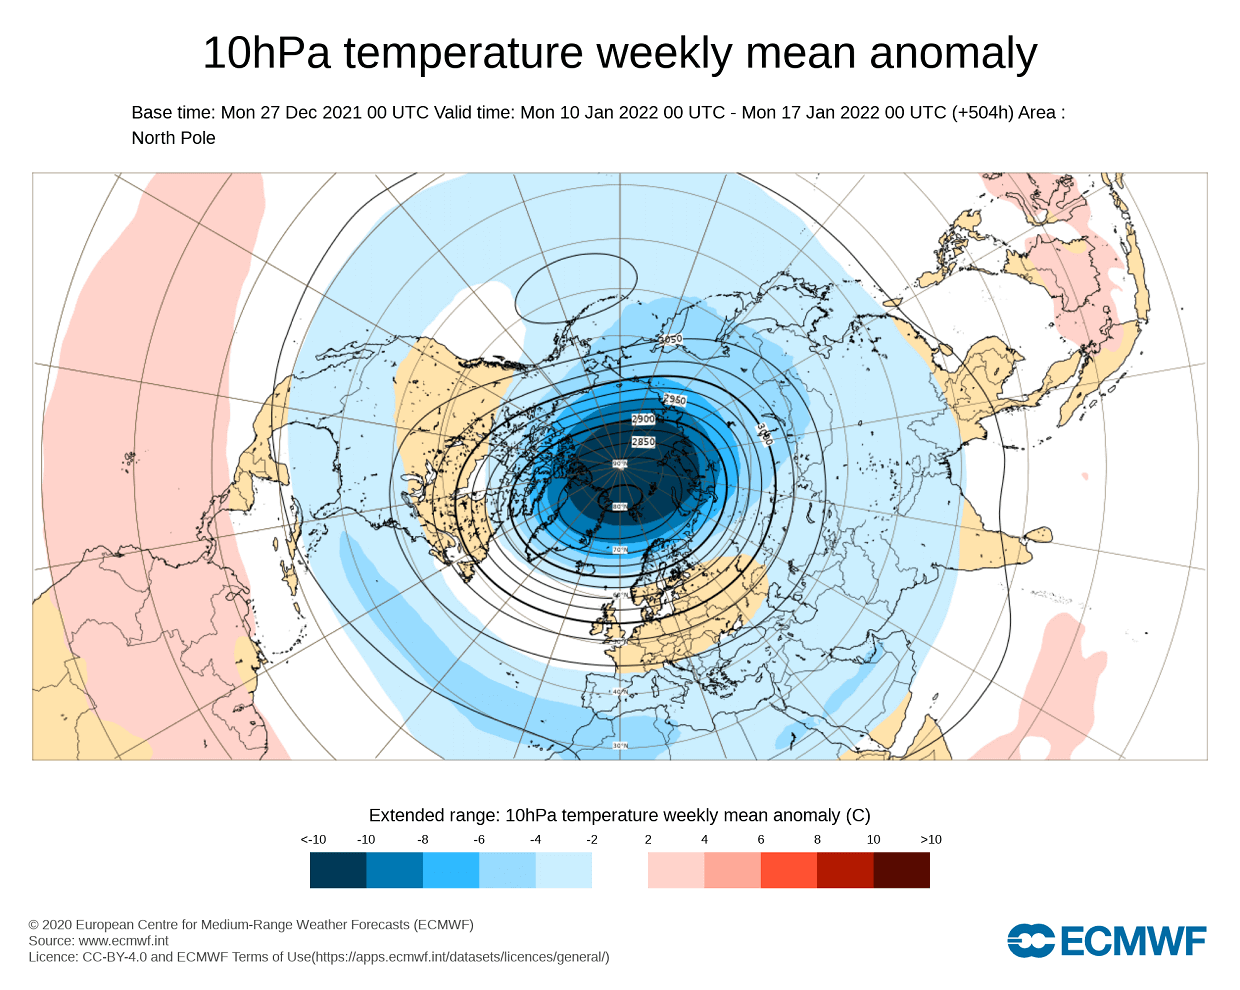 stratospheric-warming-forecast-ecmwf-late-january-cold-season-2022